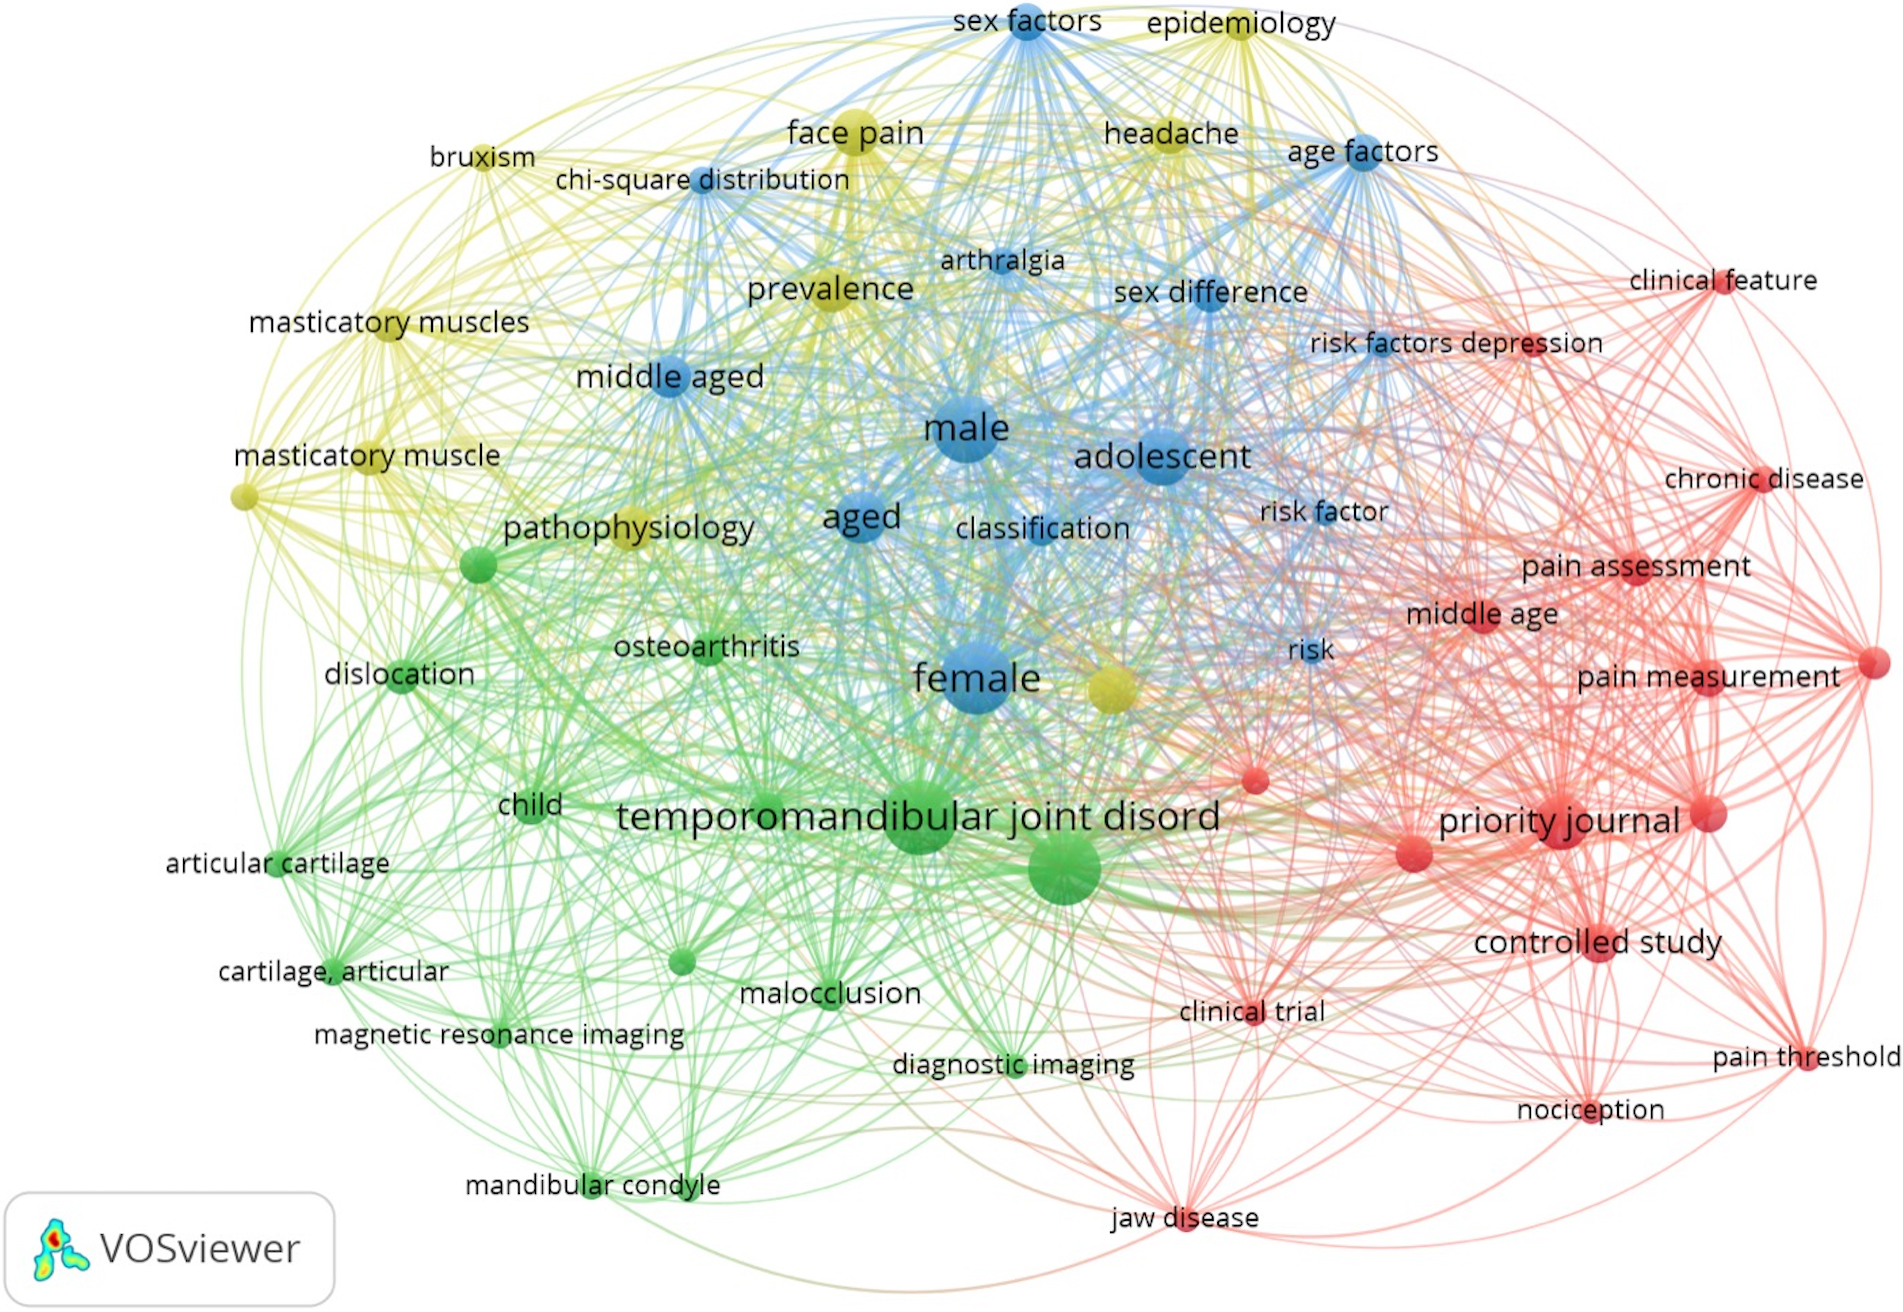 Network analysis of keywords (visualized analysis).